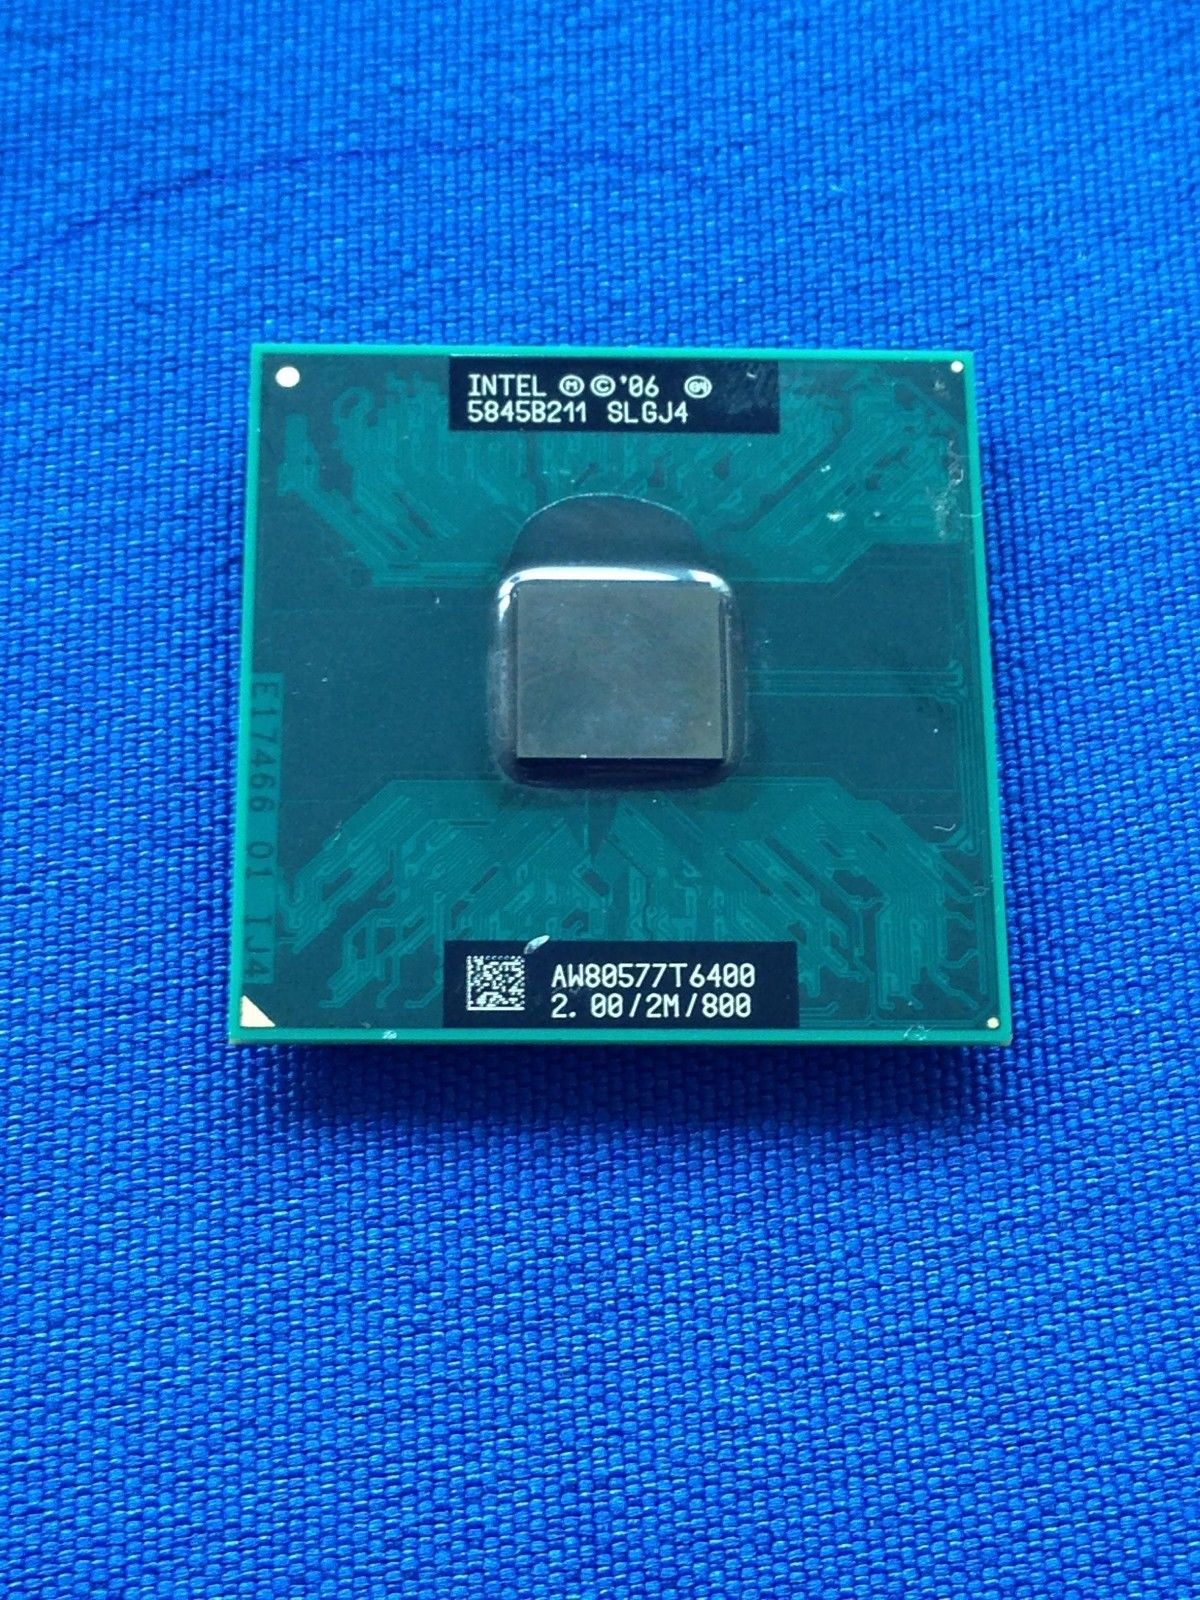 Intel Core2 Duo T6400 SLGJ4 Mobile CPU Processor Socket P 2GHz 2MB 800MHz